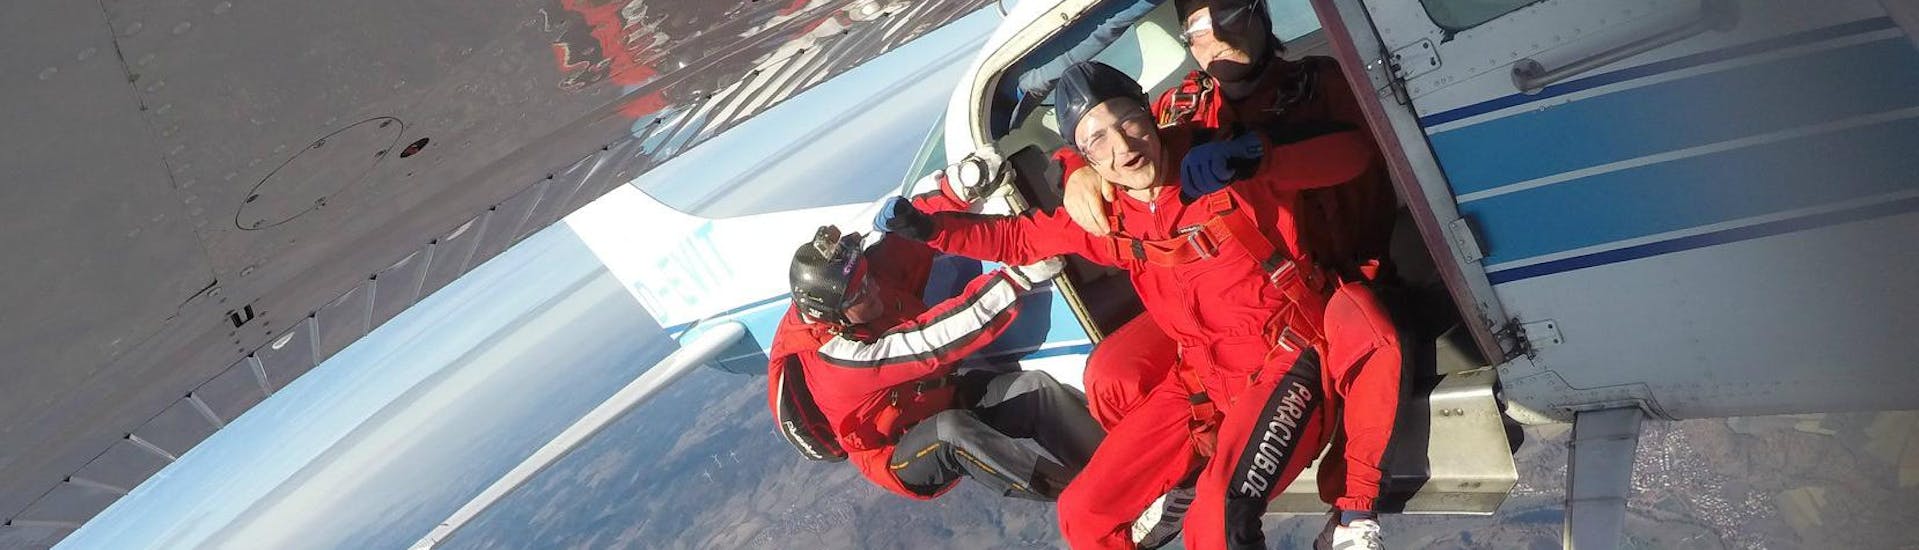 Tandem Skydive from 4000m - Schwäbisch Hall with Blue Sky Adventures Schwäbisch Hall - Hero image